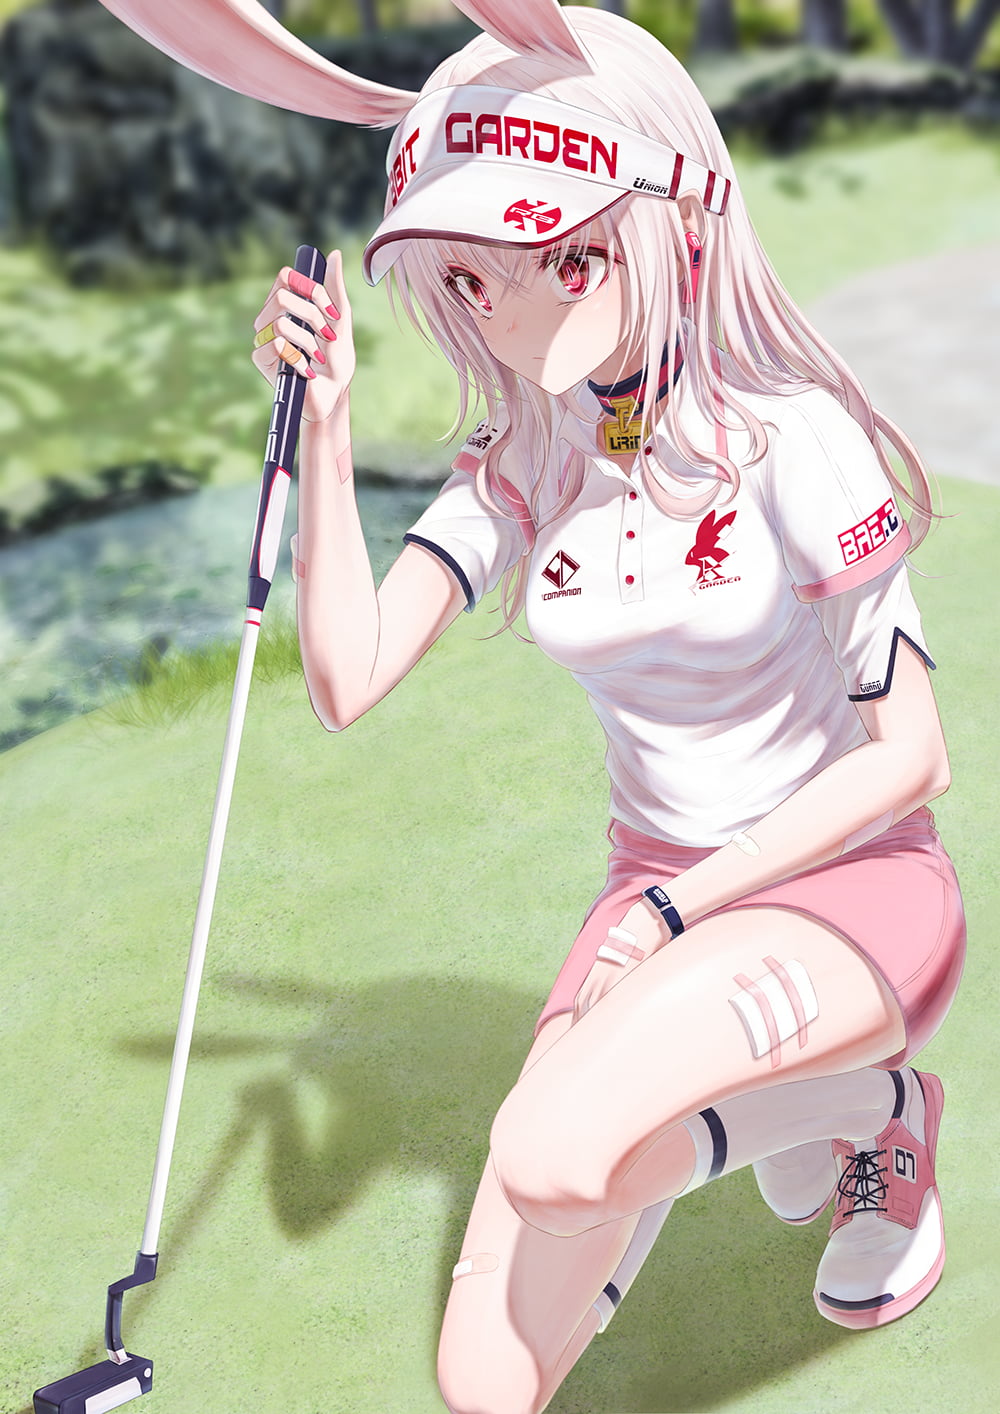 Anime Anime Girls Bunny Girl Bunny Ears White Hair Long Hair Bangs Pink Eyes Golf Outfit Pink Golf C 1000x1414